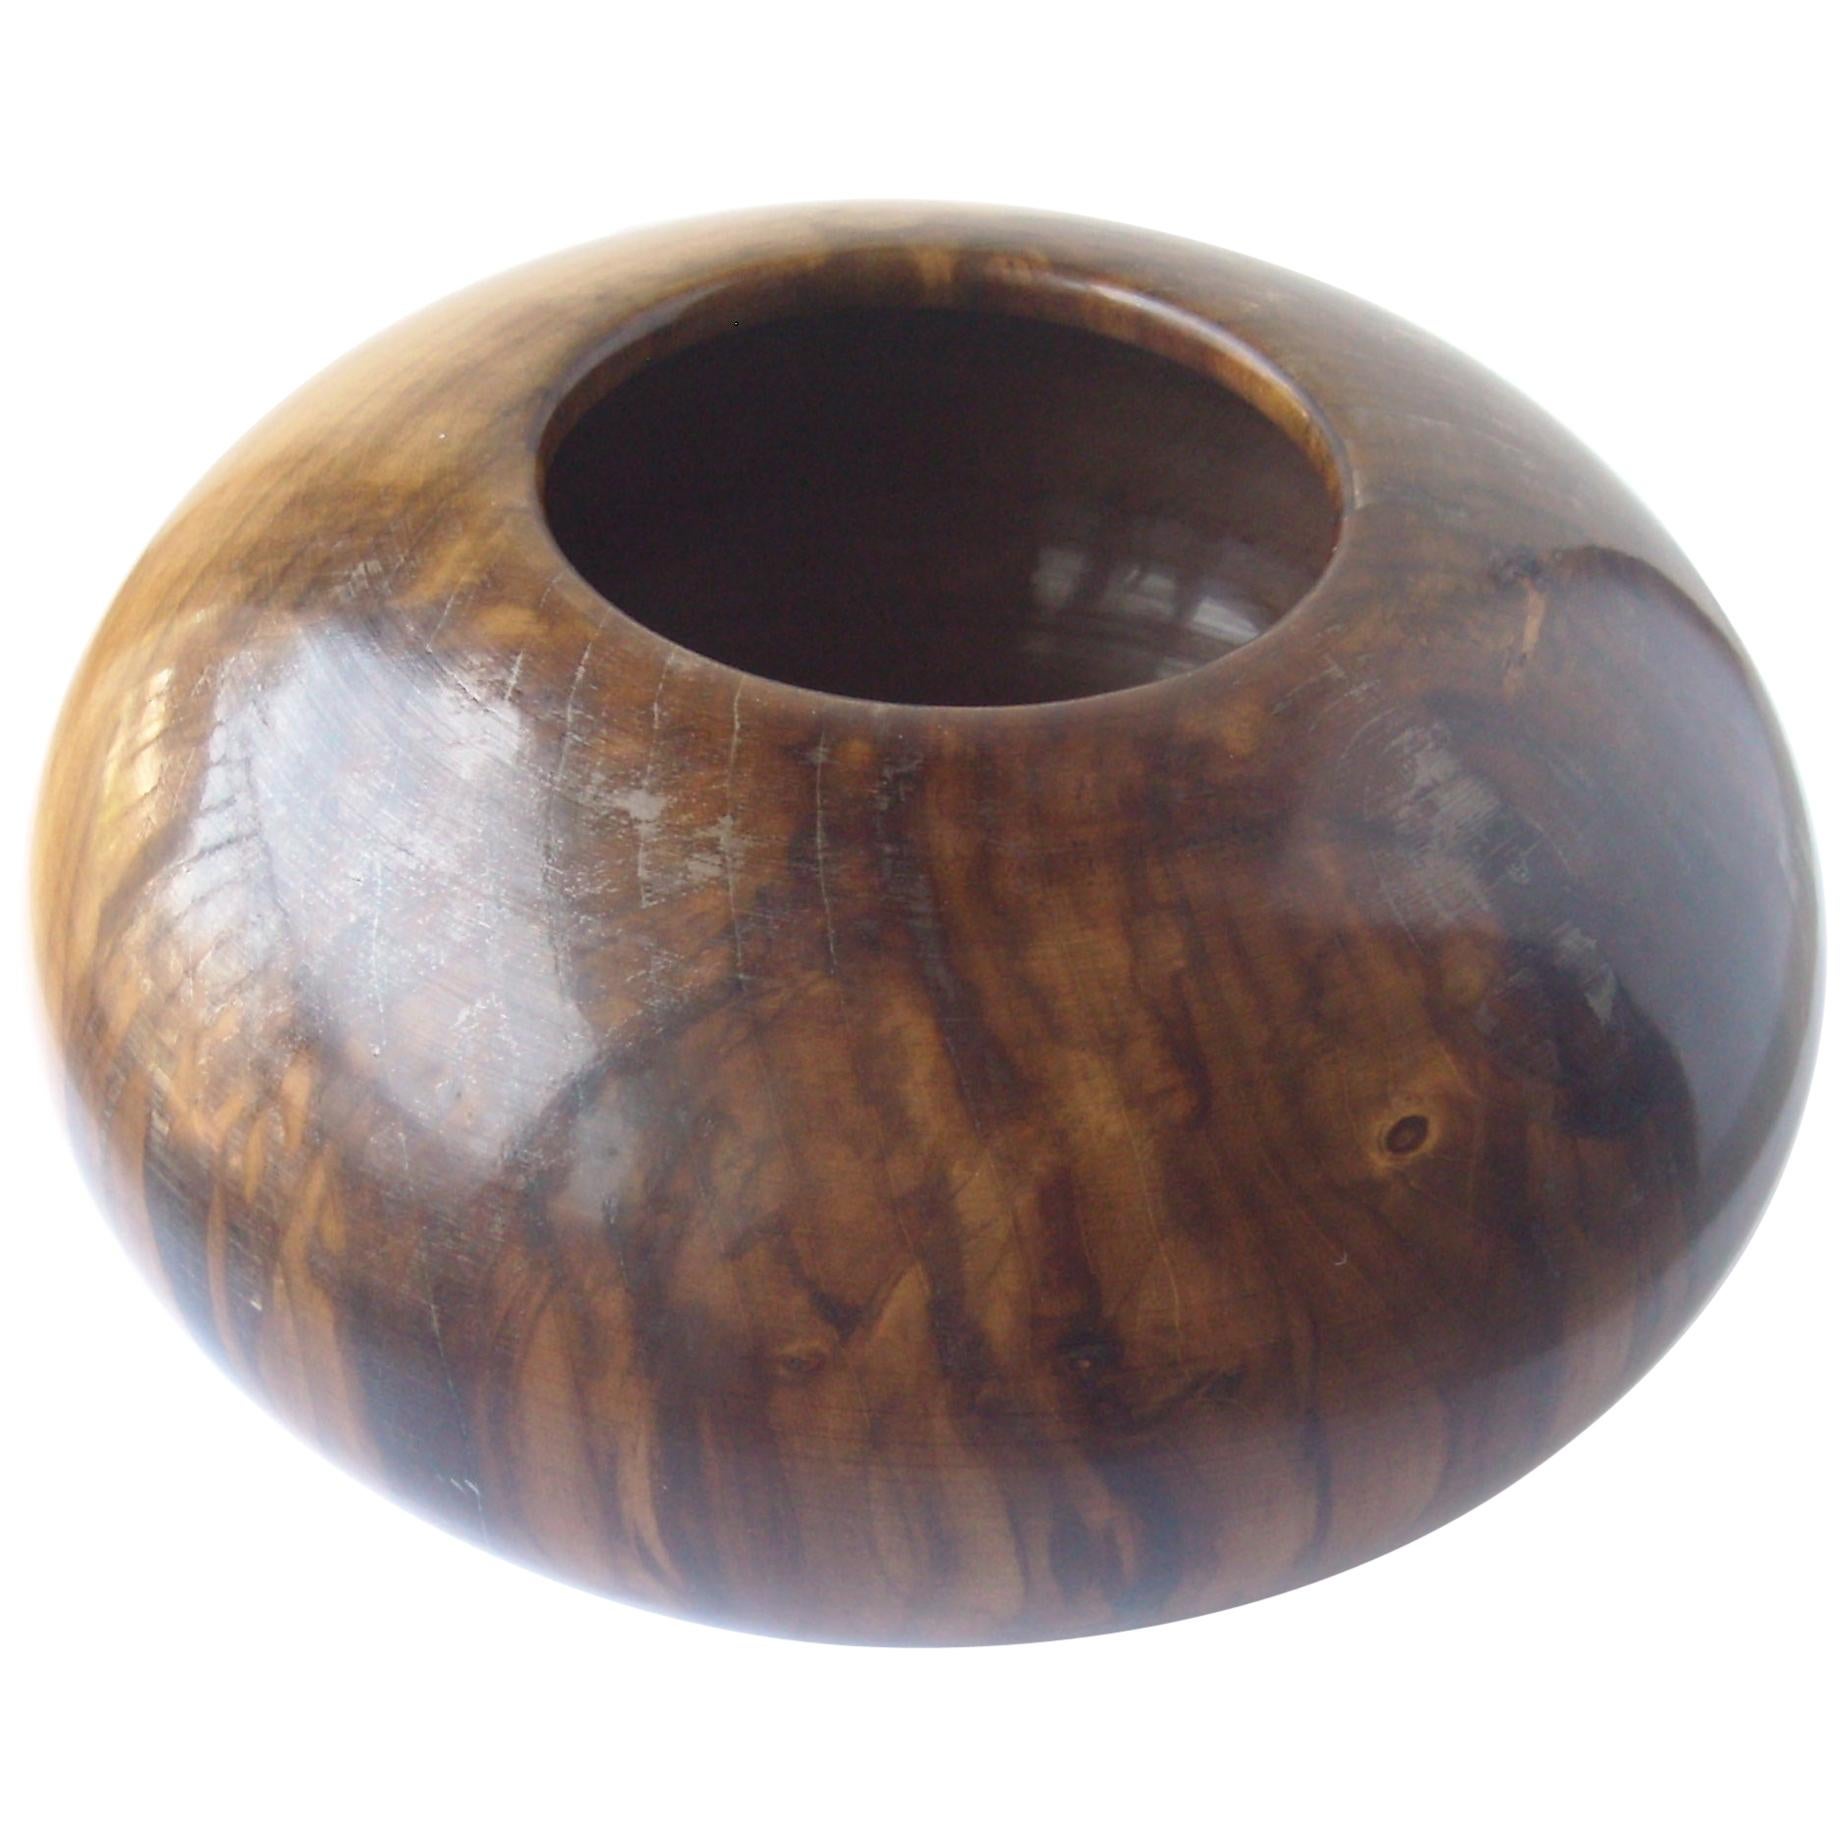 Philip Moulthrop, Museum Quality Tulipwood Vessel, Vase, Bowl, 5890, Signed